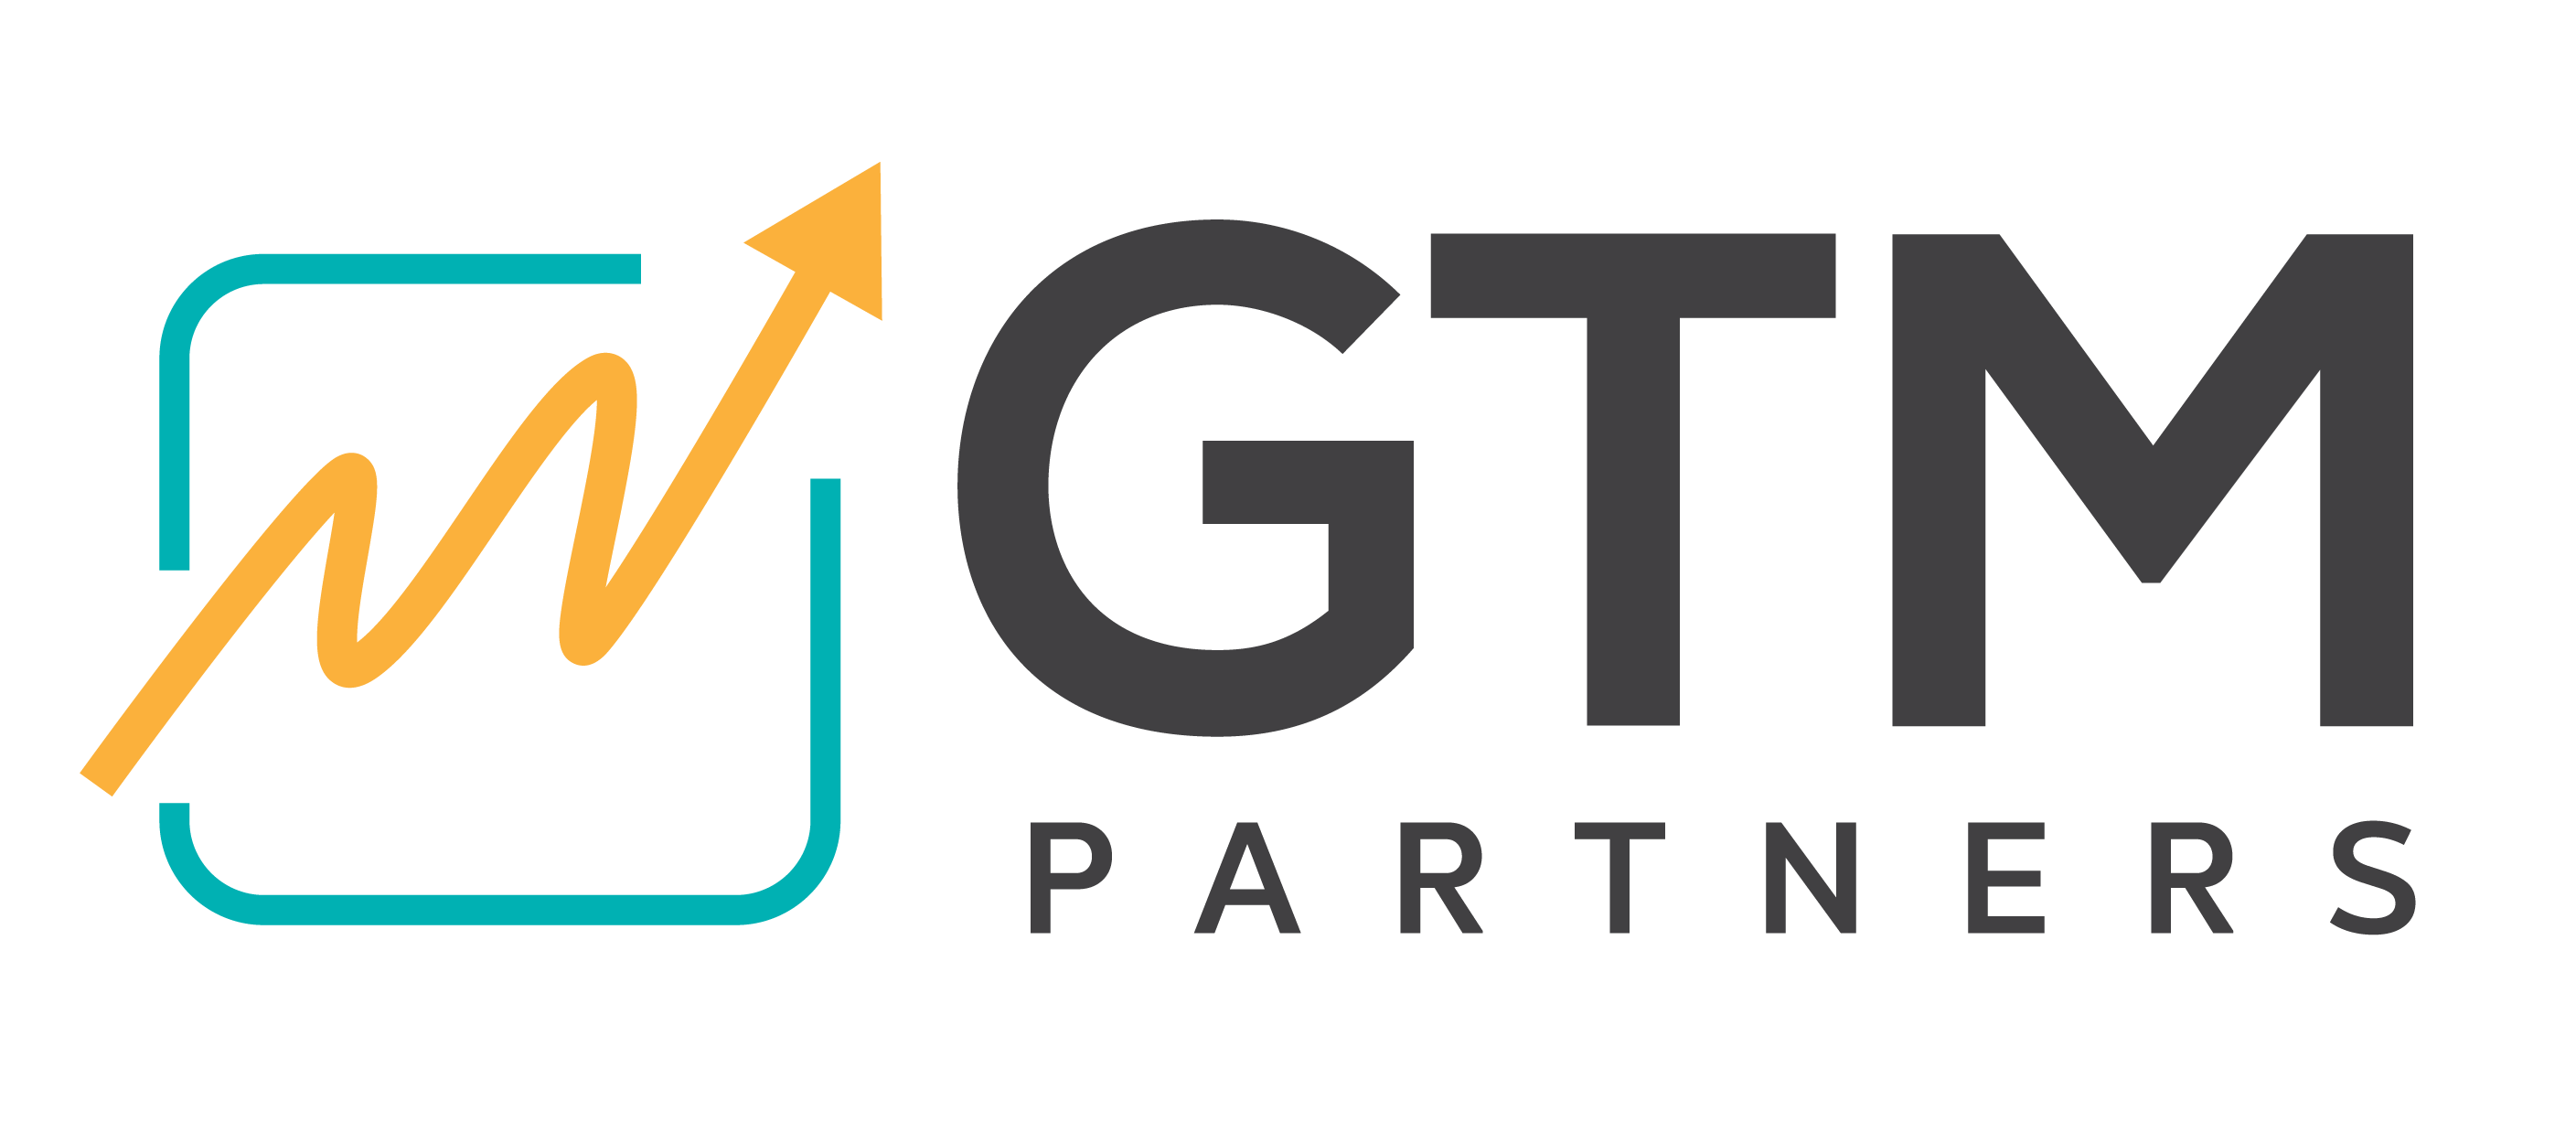 GTM Partners